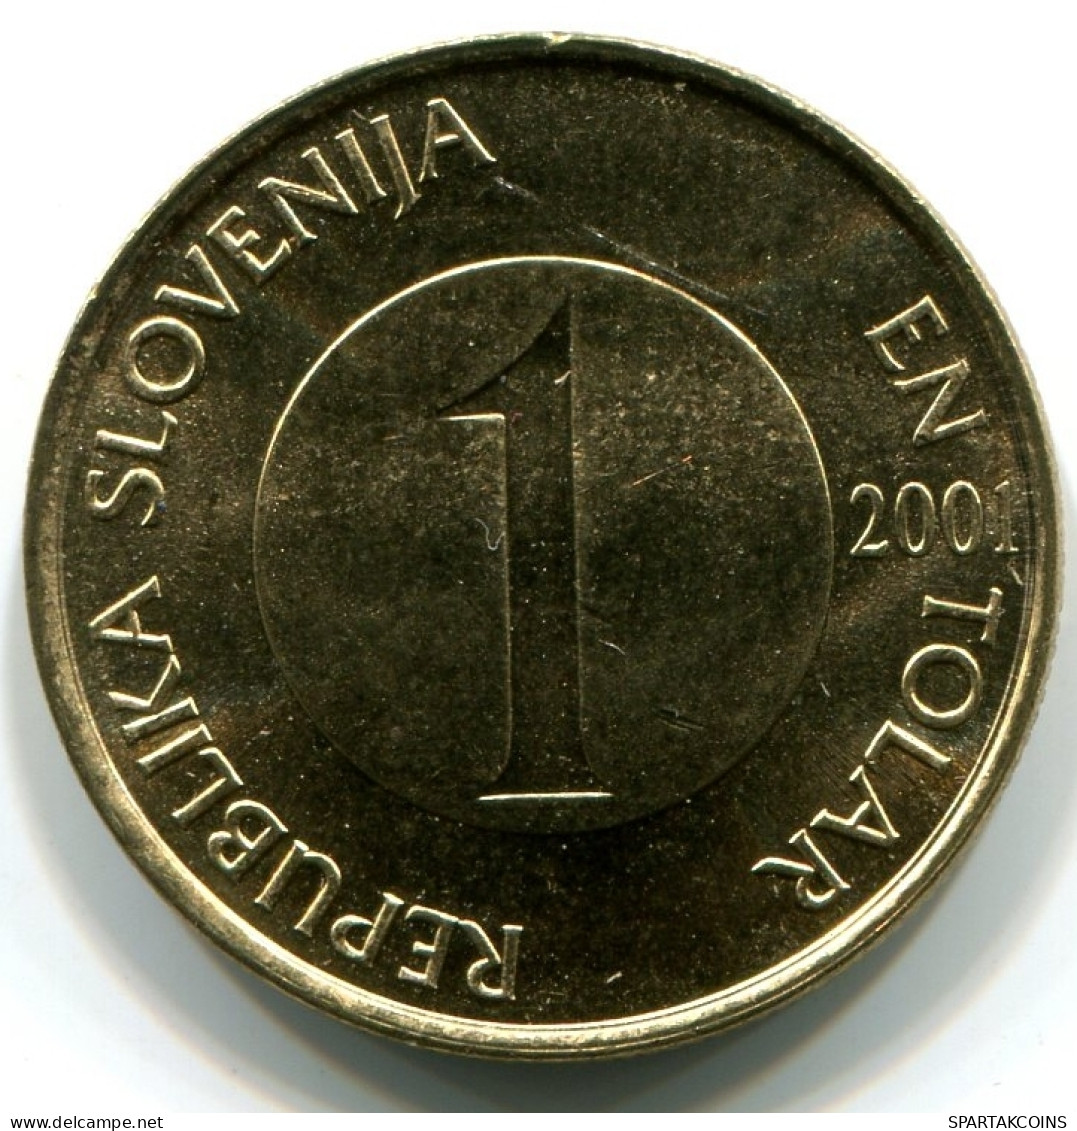 1 TOLAR 2001 SLOVENIA UNC Fish Coin #W11302.U - Slovénie